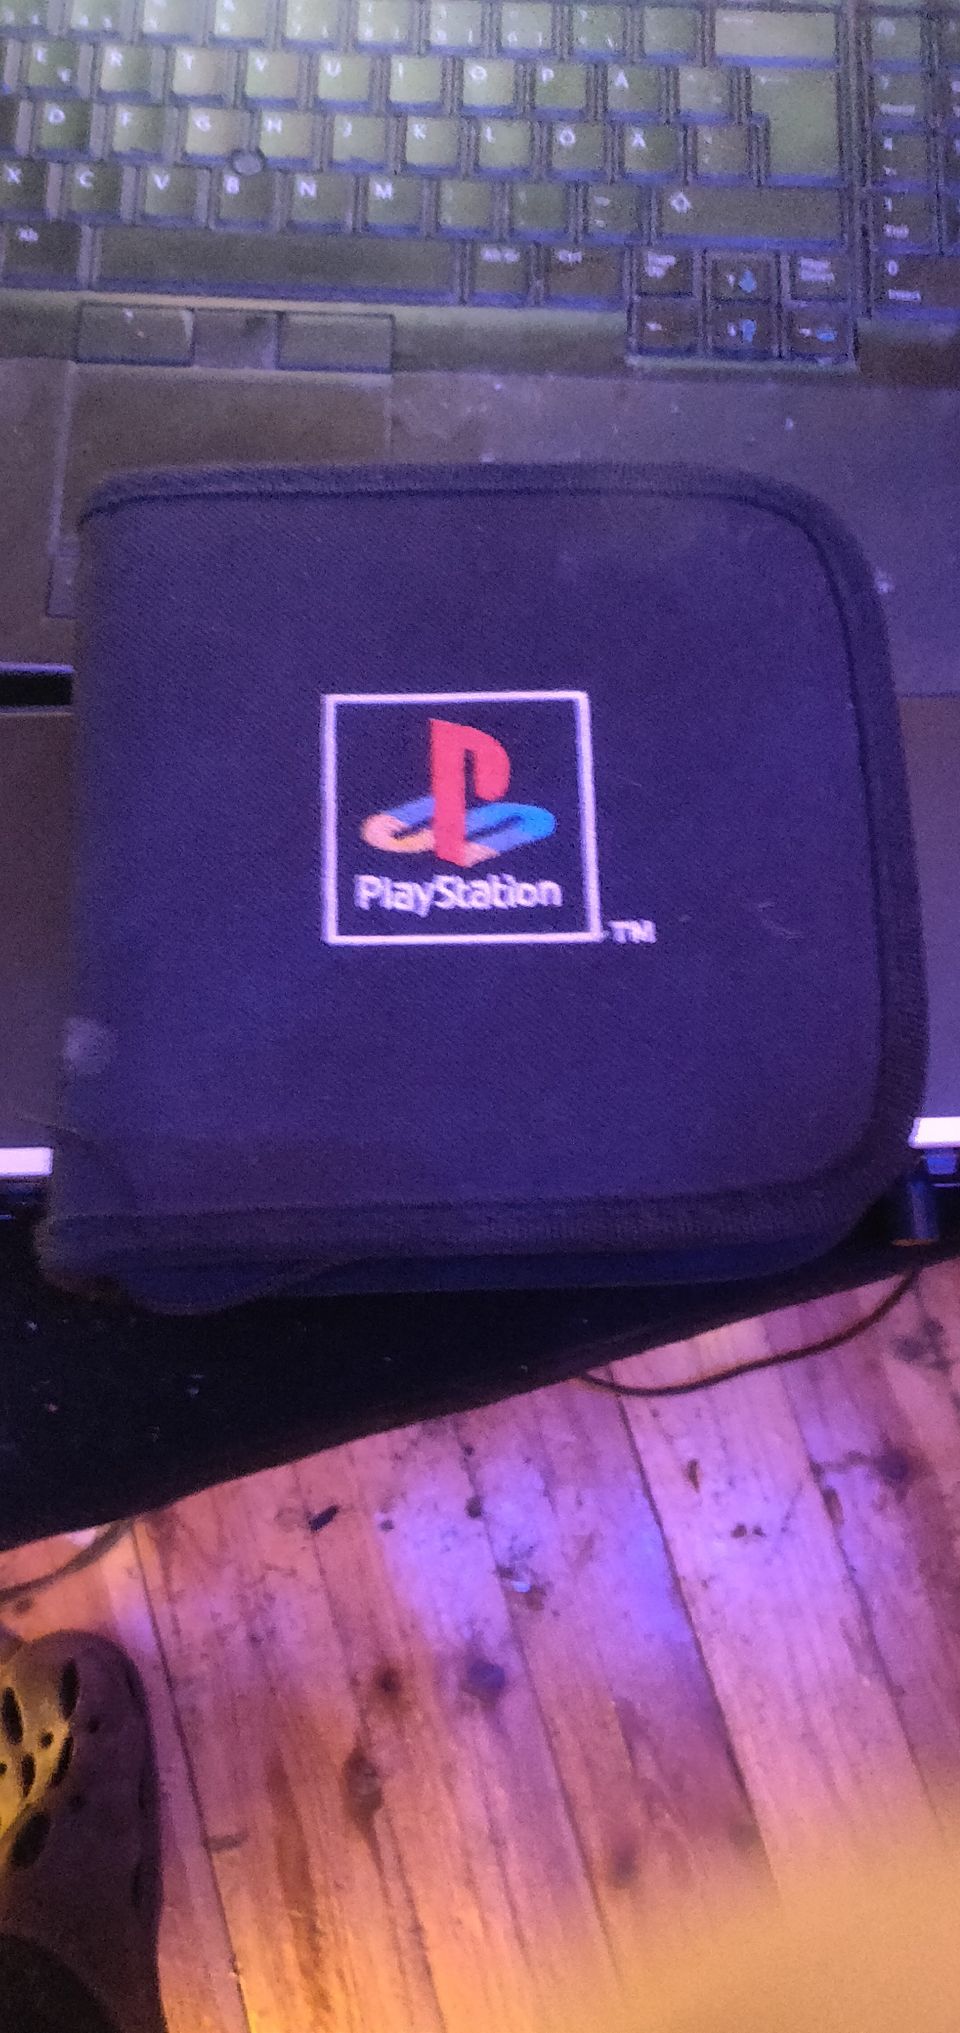 Playstation case